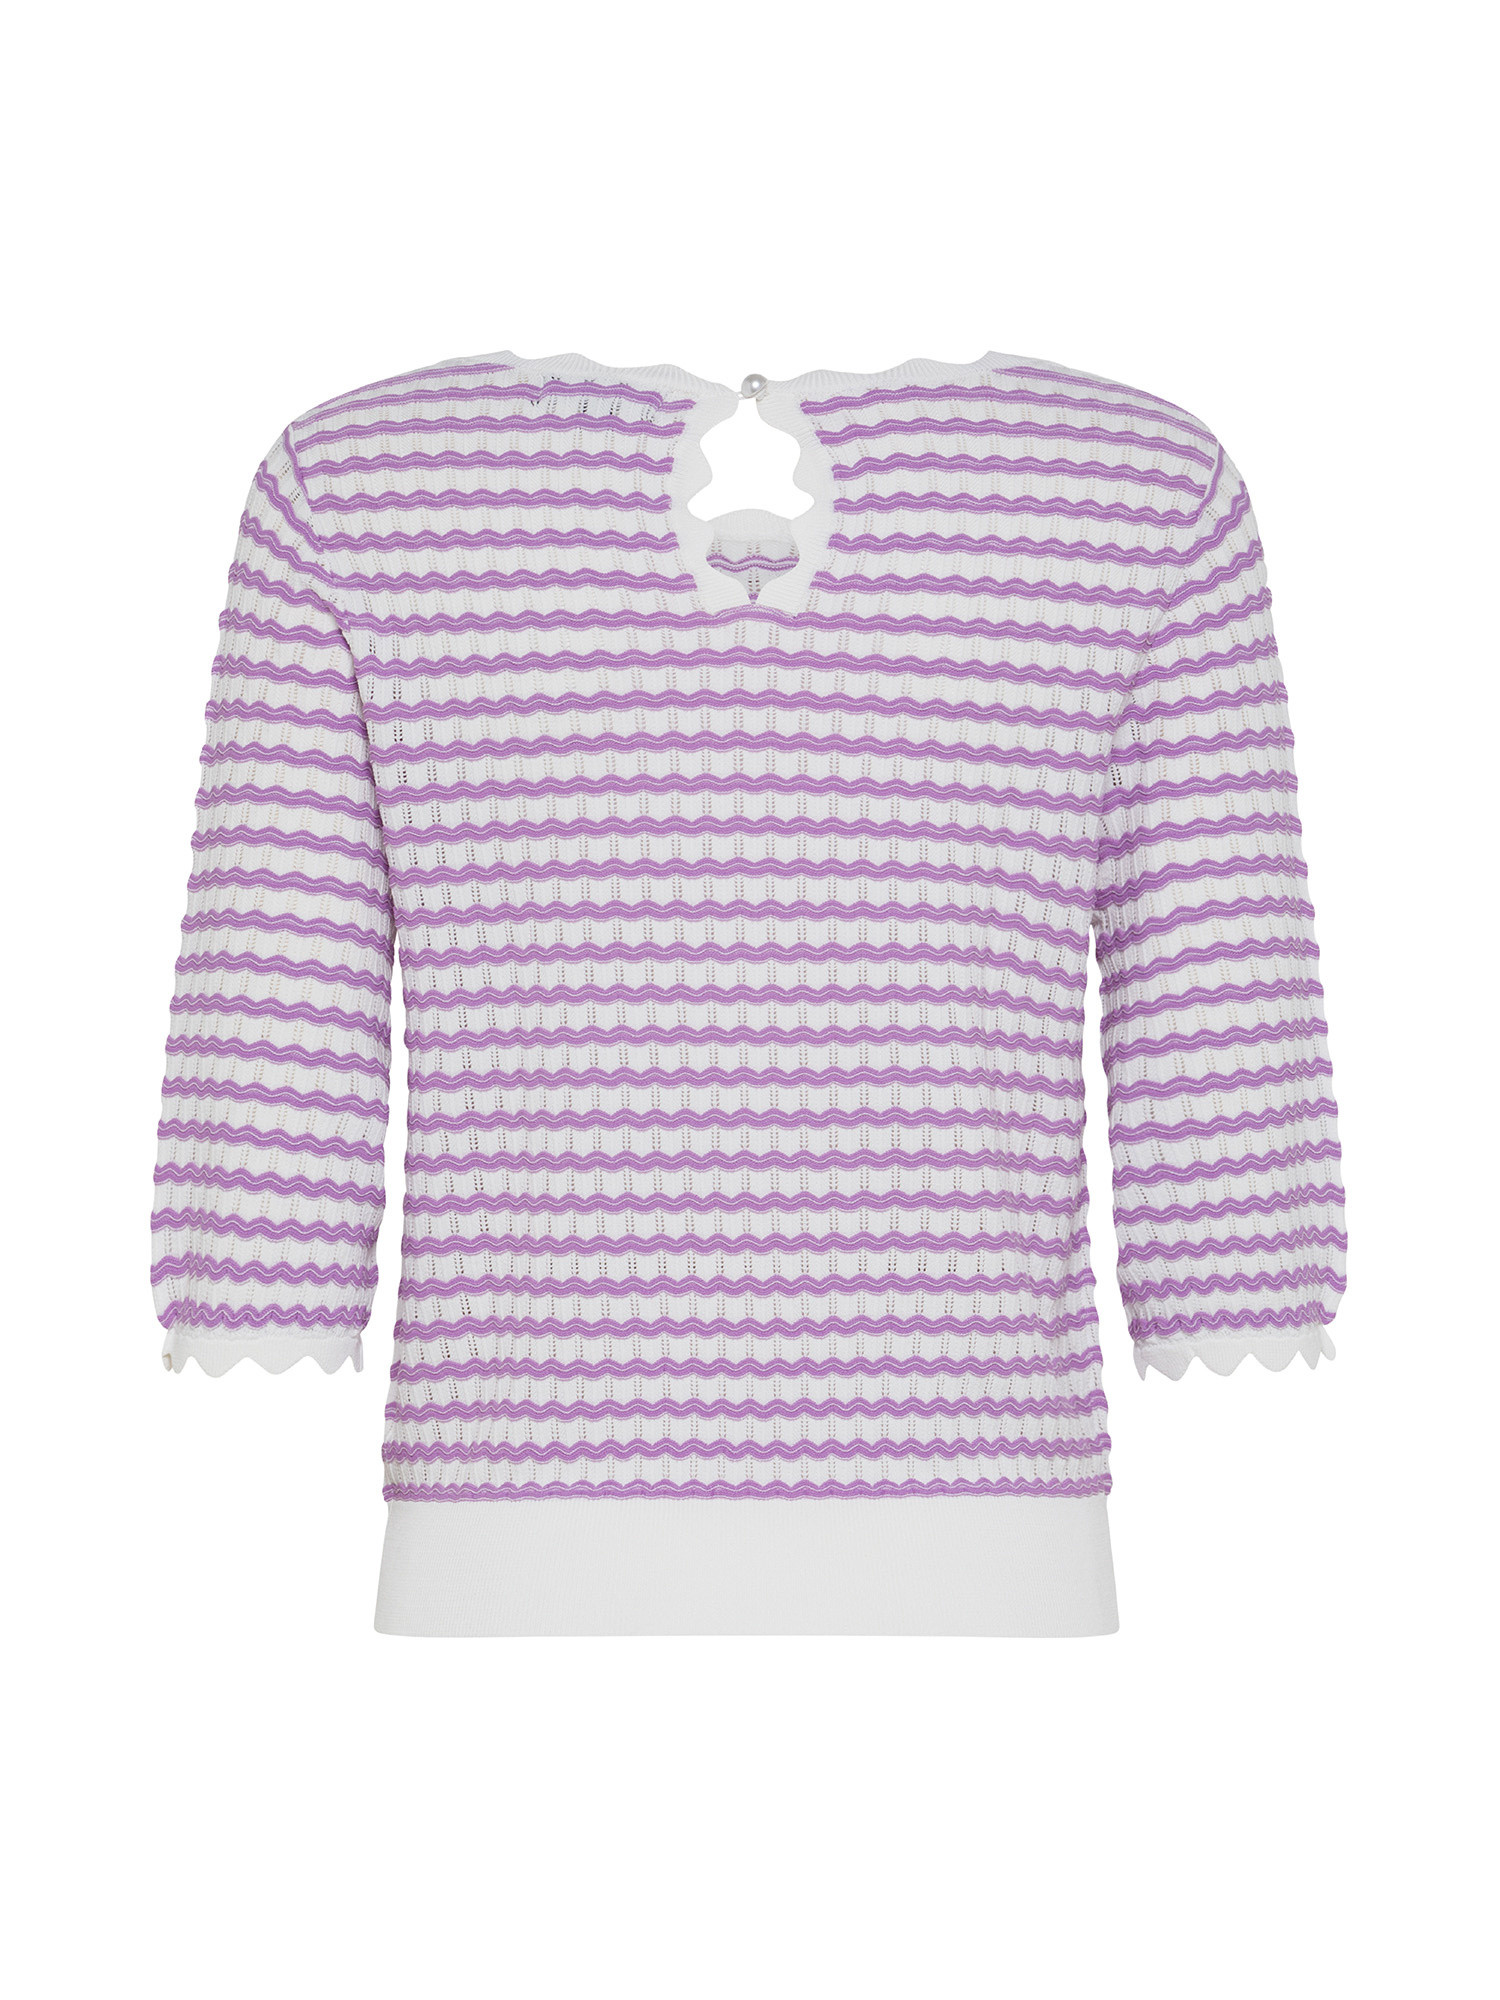 Koan - Wave stitch sweater, Purple Lilac, large image number 1